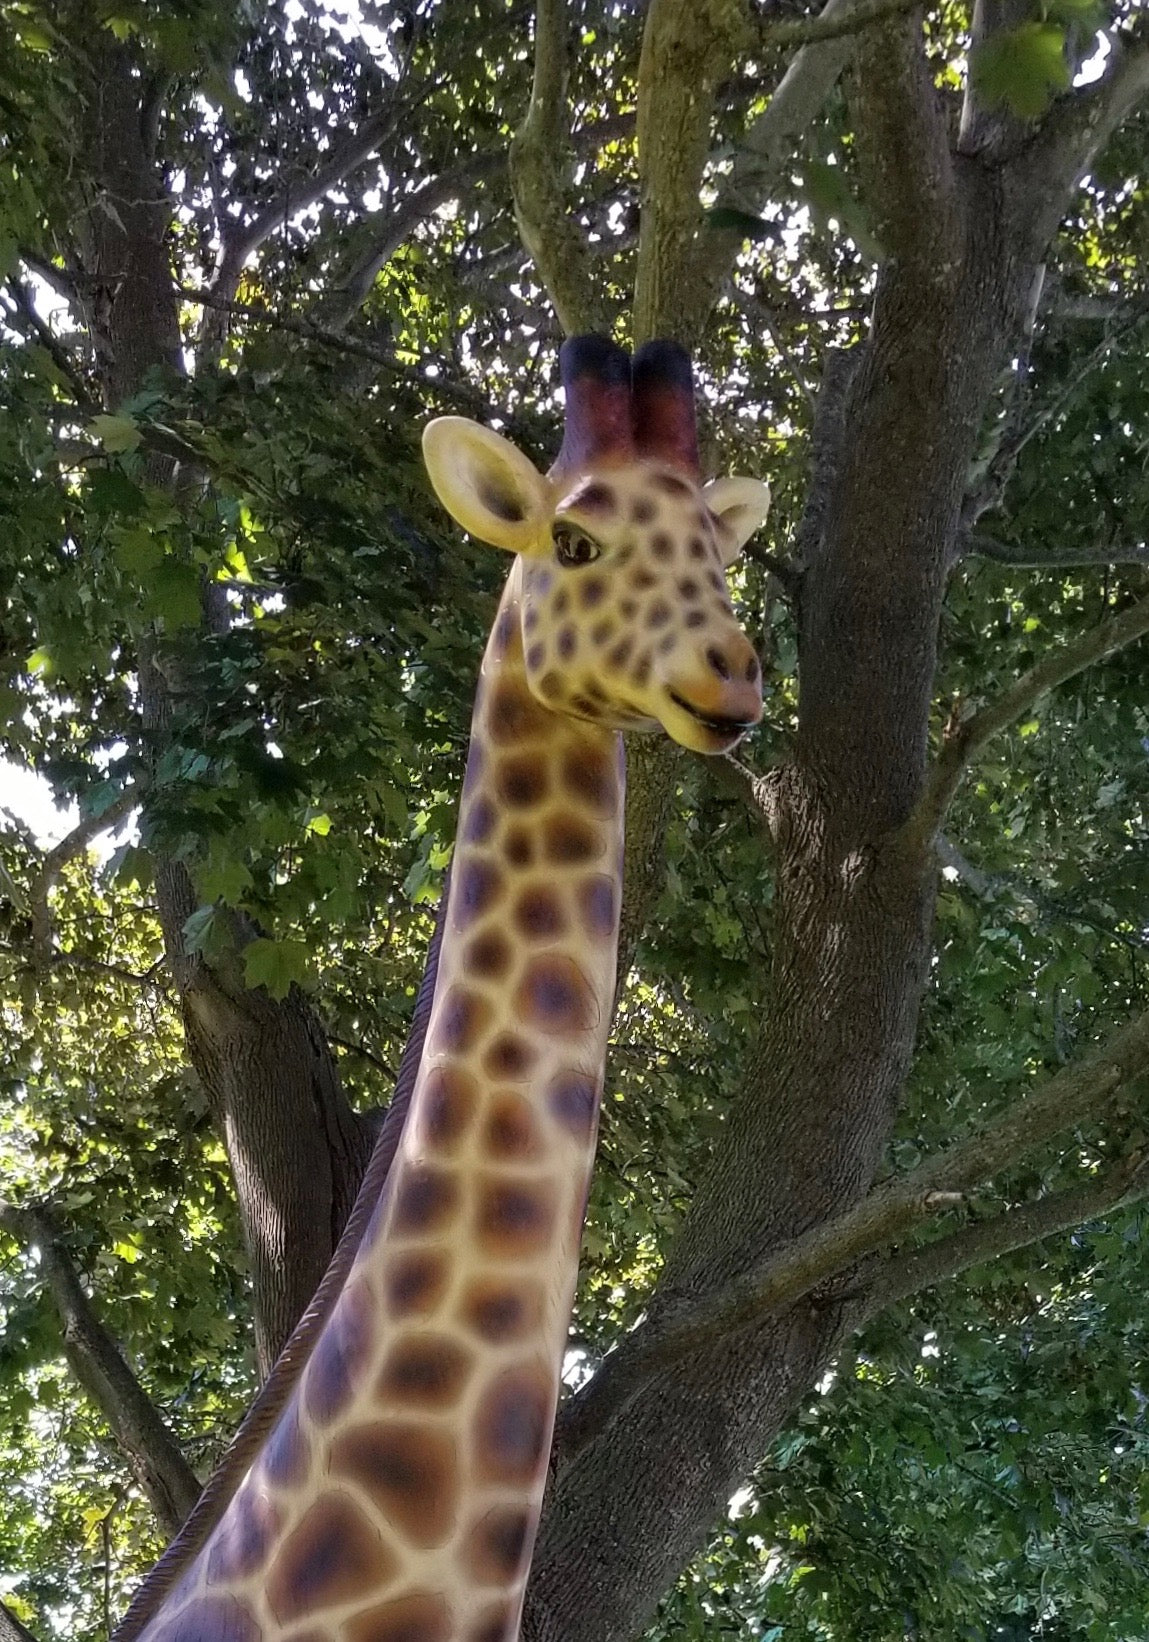 giraffe statue in facial pose